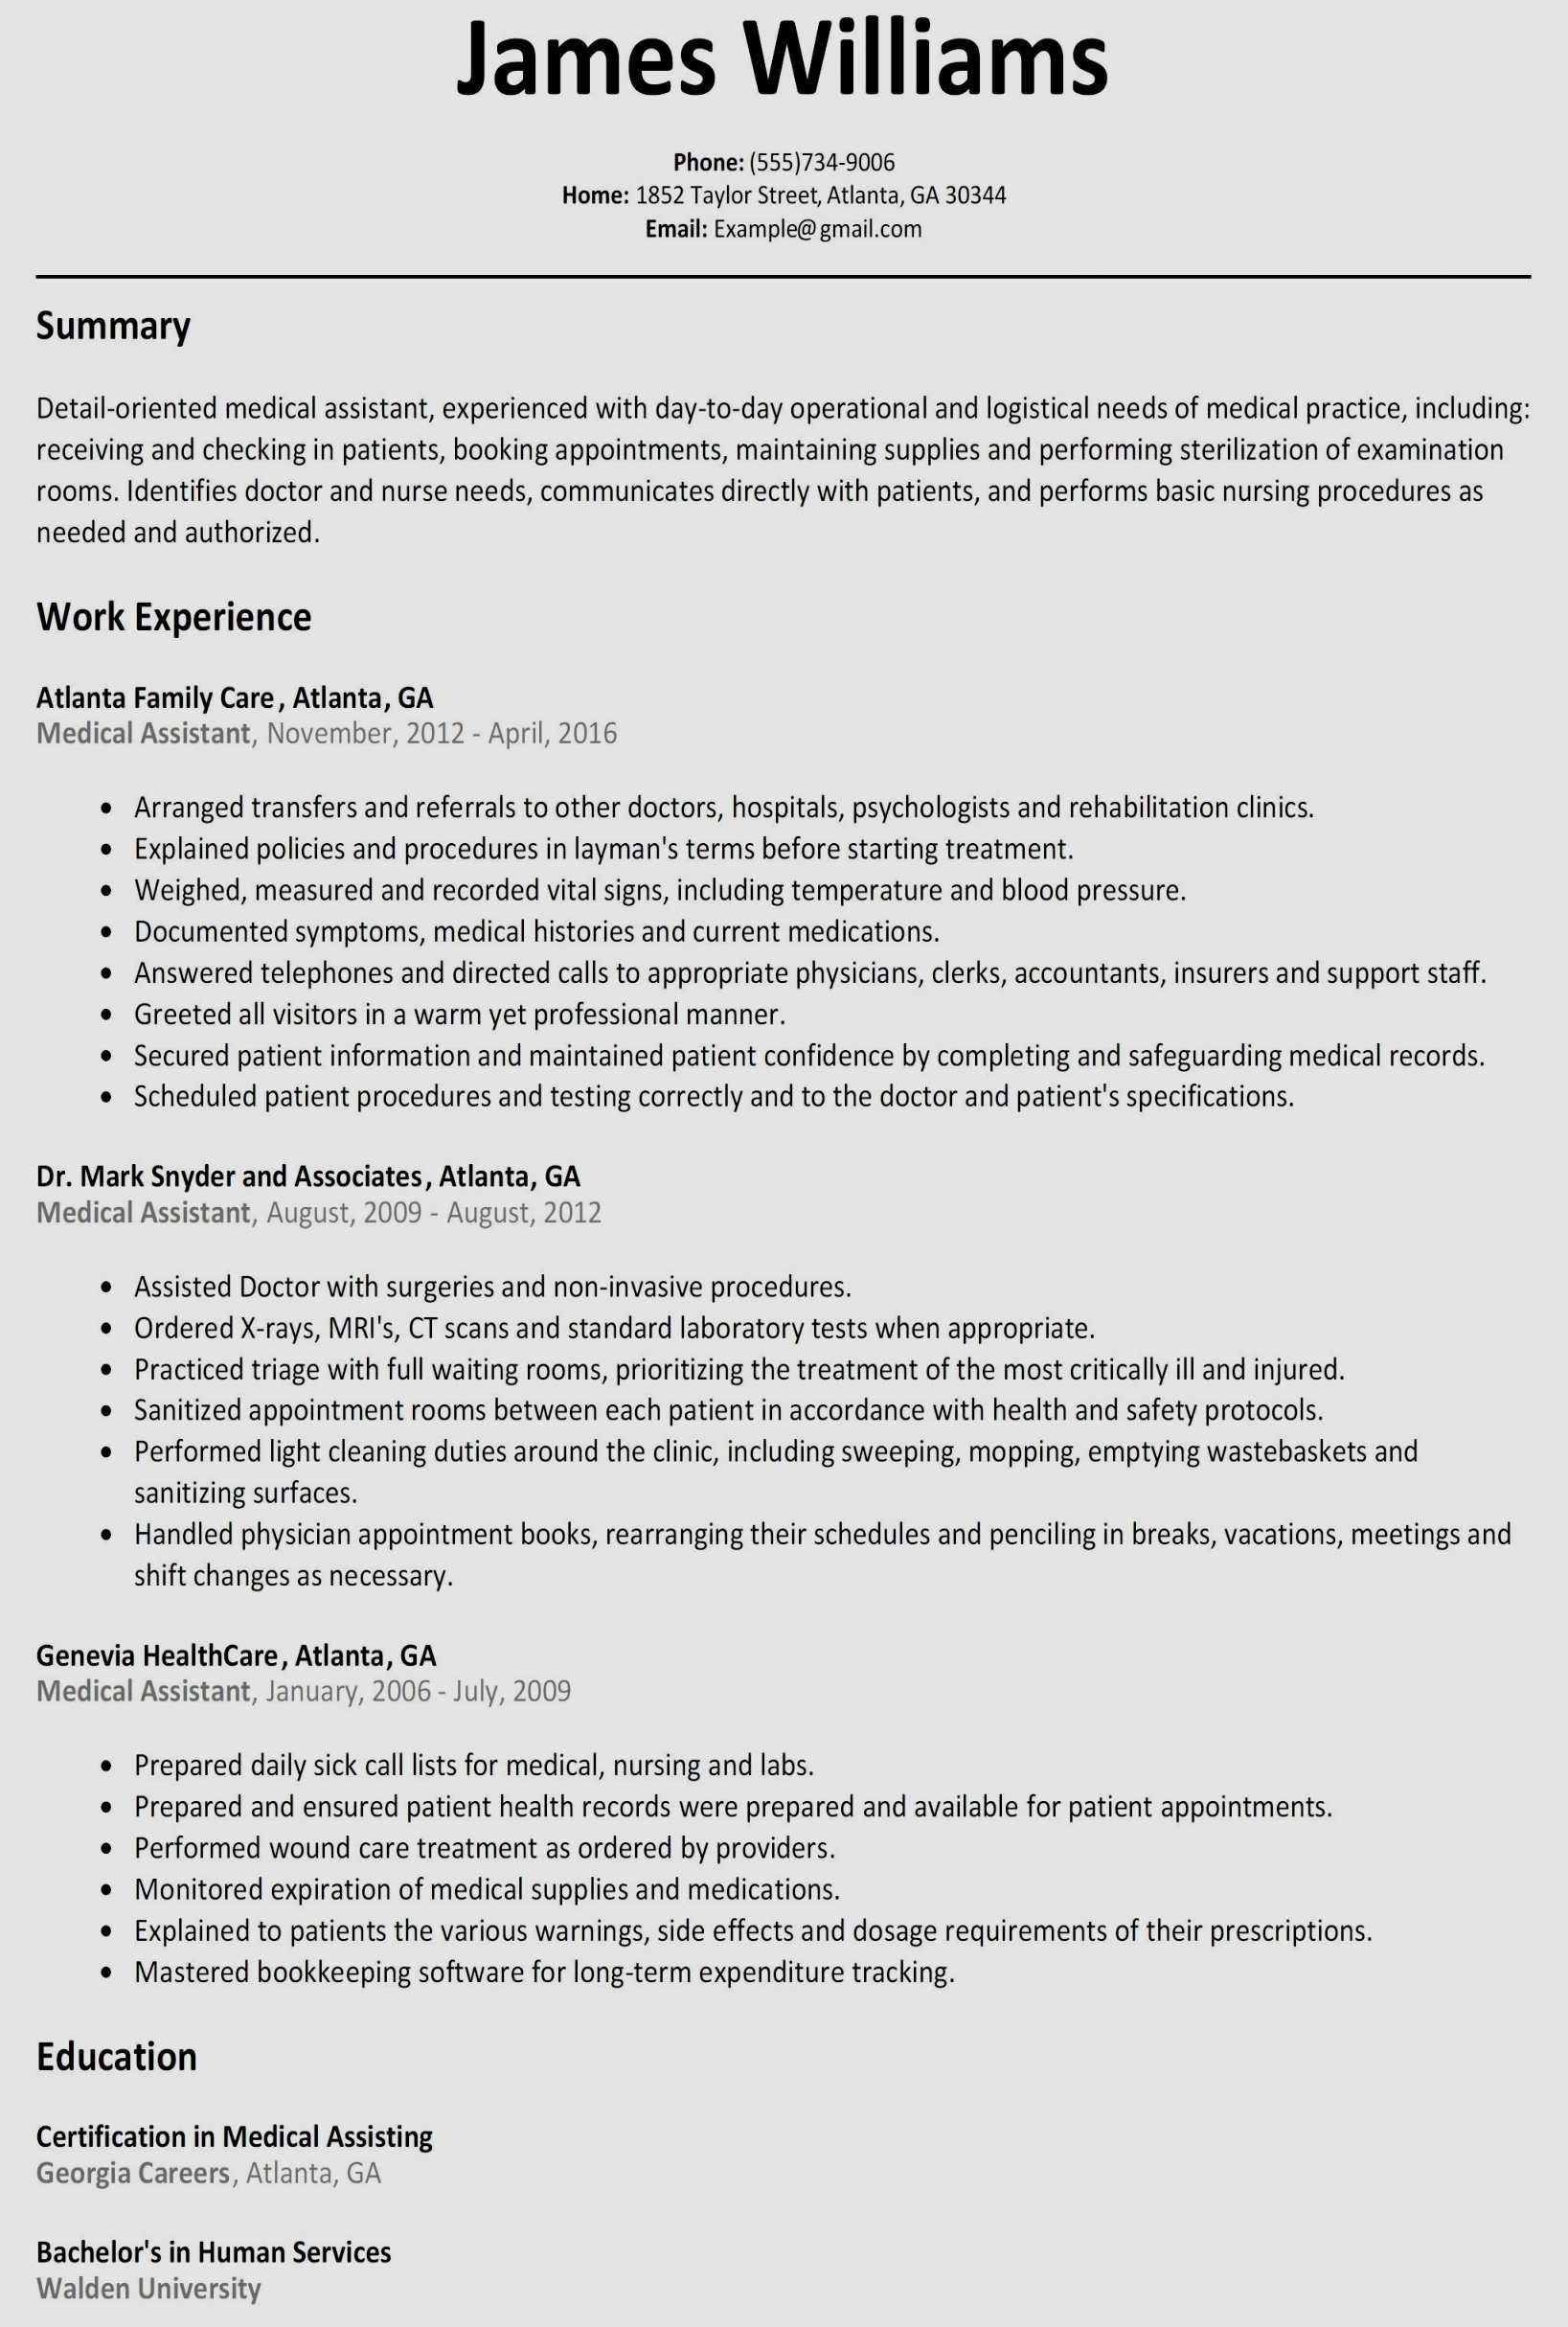 Resume Templates Microsoft Word 8 How To Write Professional Resume Templates Microsoft Word For Every Job Search resume templates microsoft word|wikiresume.com